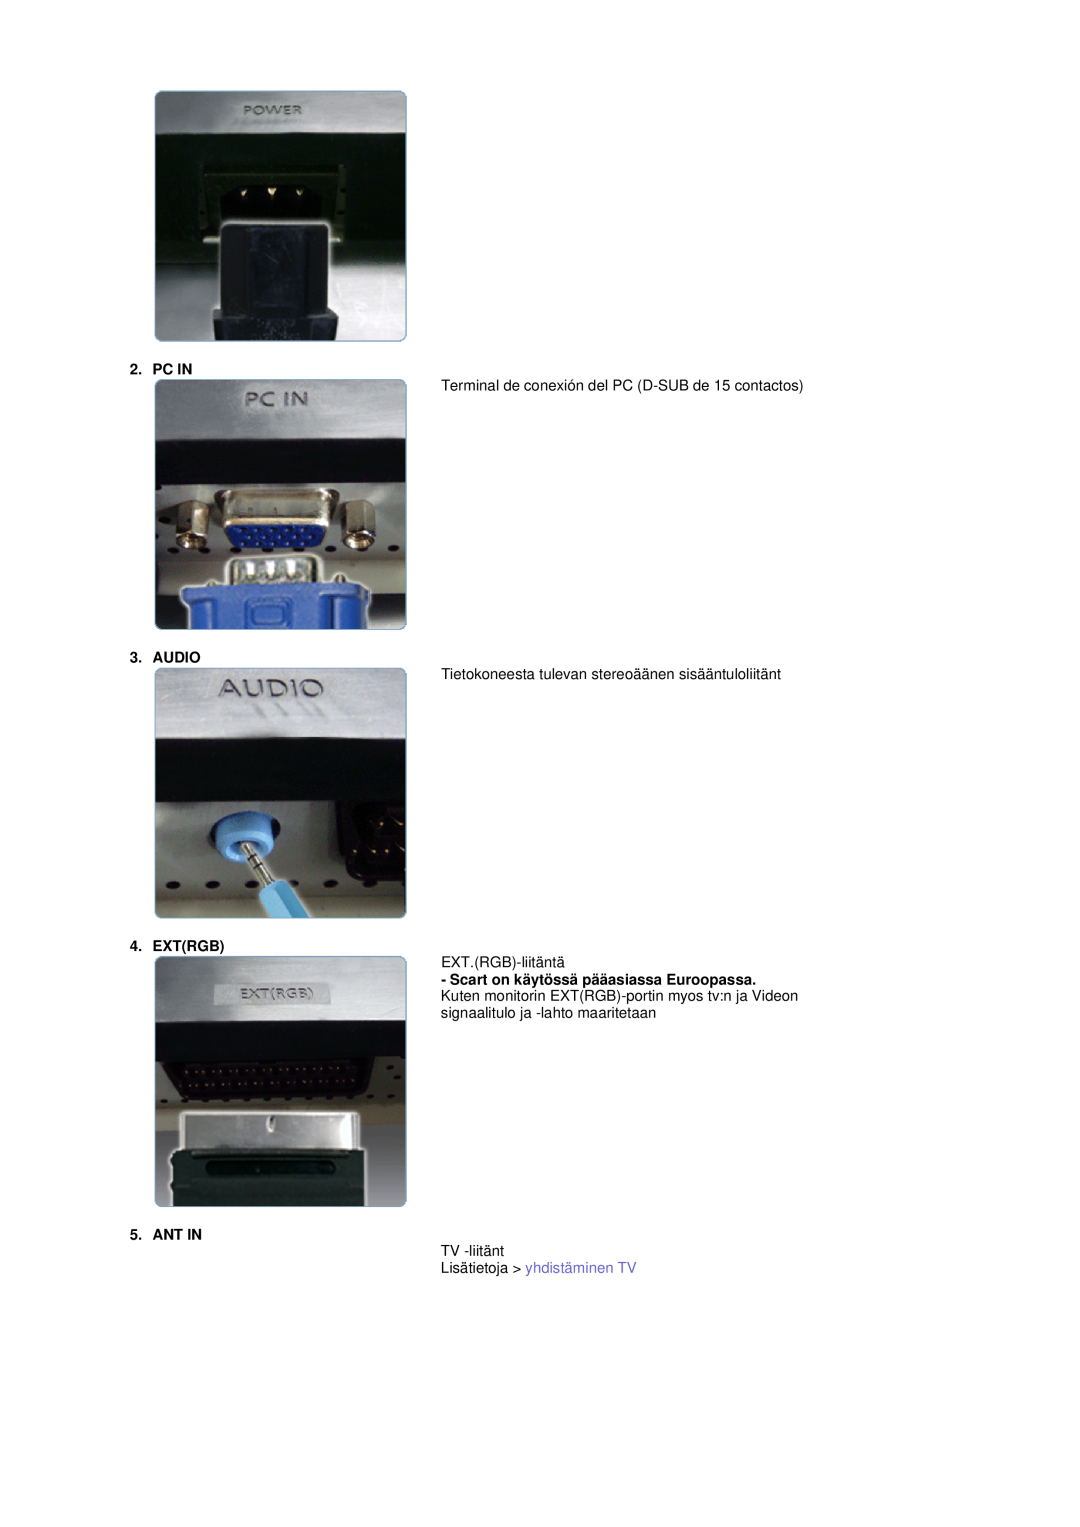 Samsung LS17DOASS/EDC Pc In, Terminal de conexión del PC D-SUB de 15 contactos, Audio, Extrgb, EXT.RGB-liitäntä, Ant In 